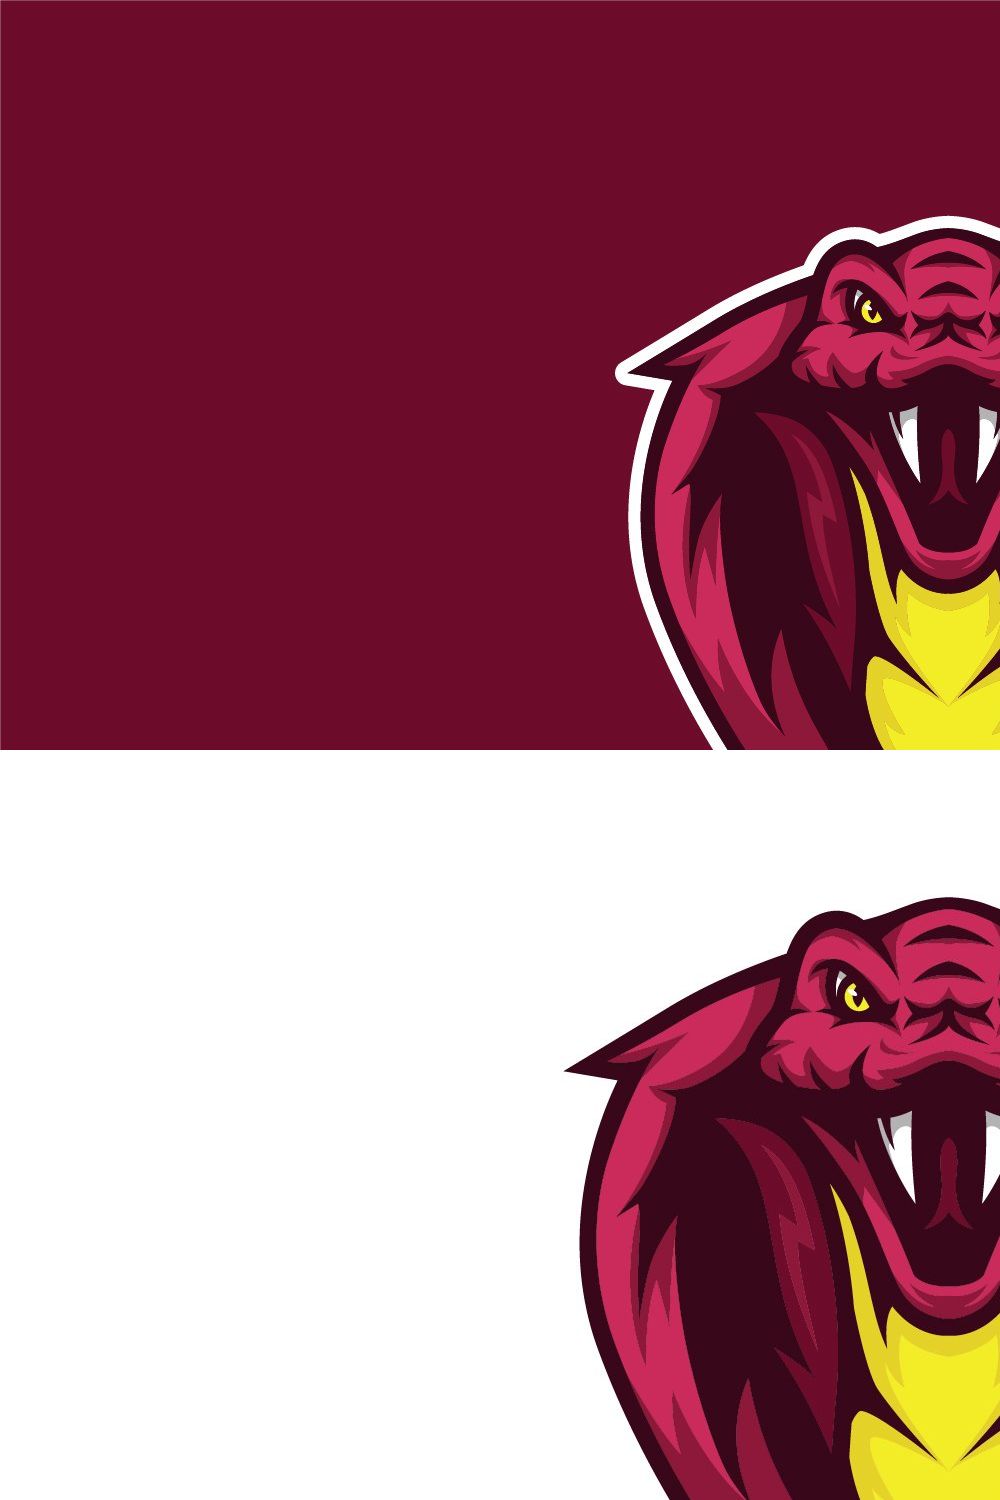 Snake Head Mascot & Esport Logo pinterest preview image.